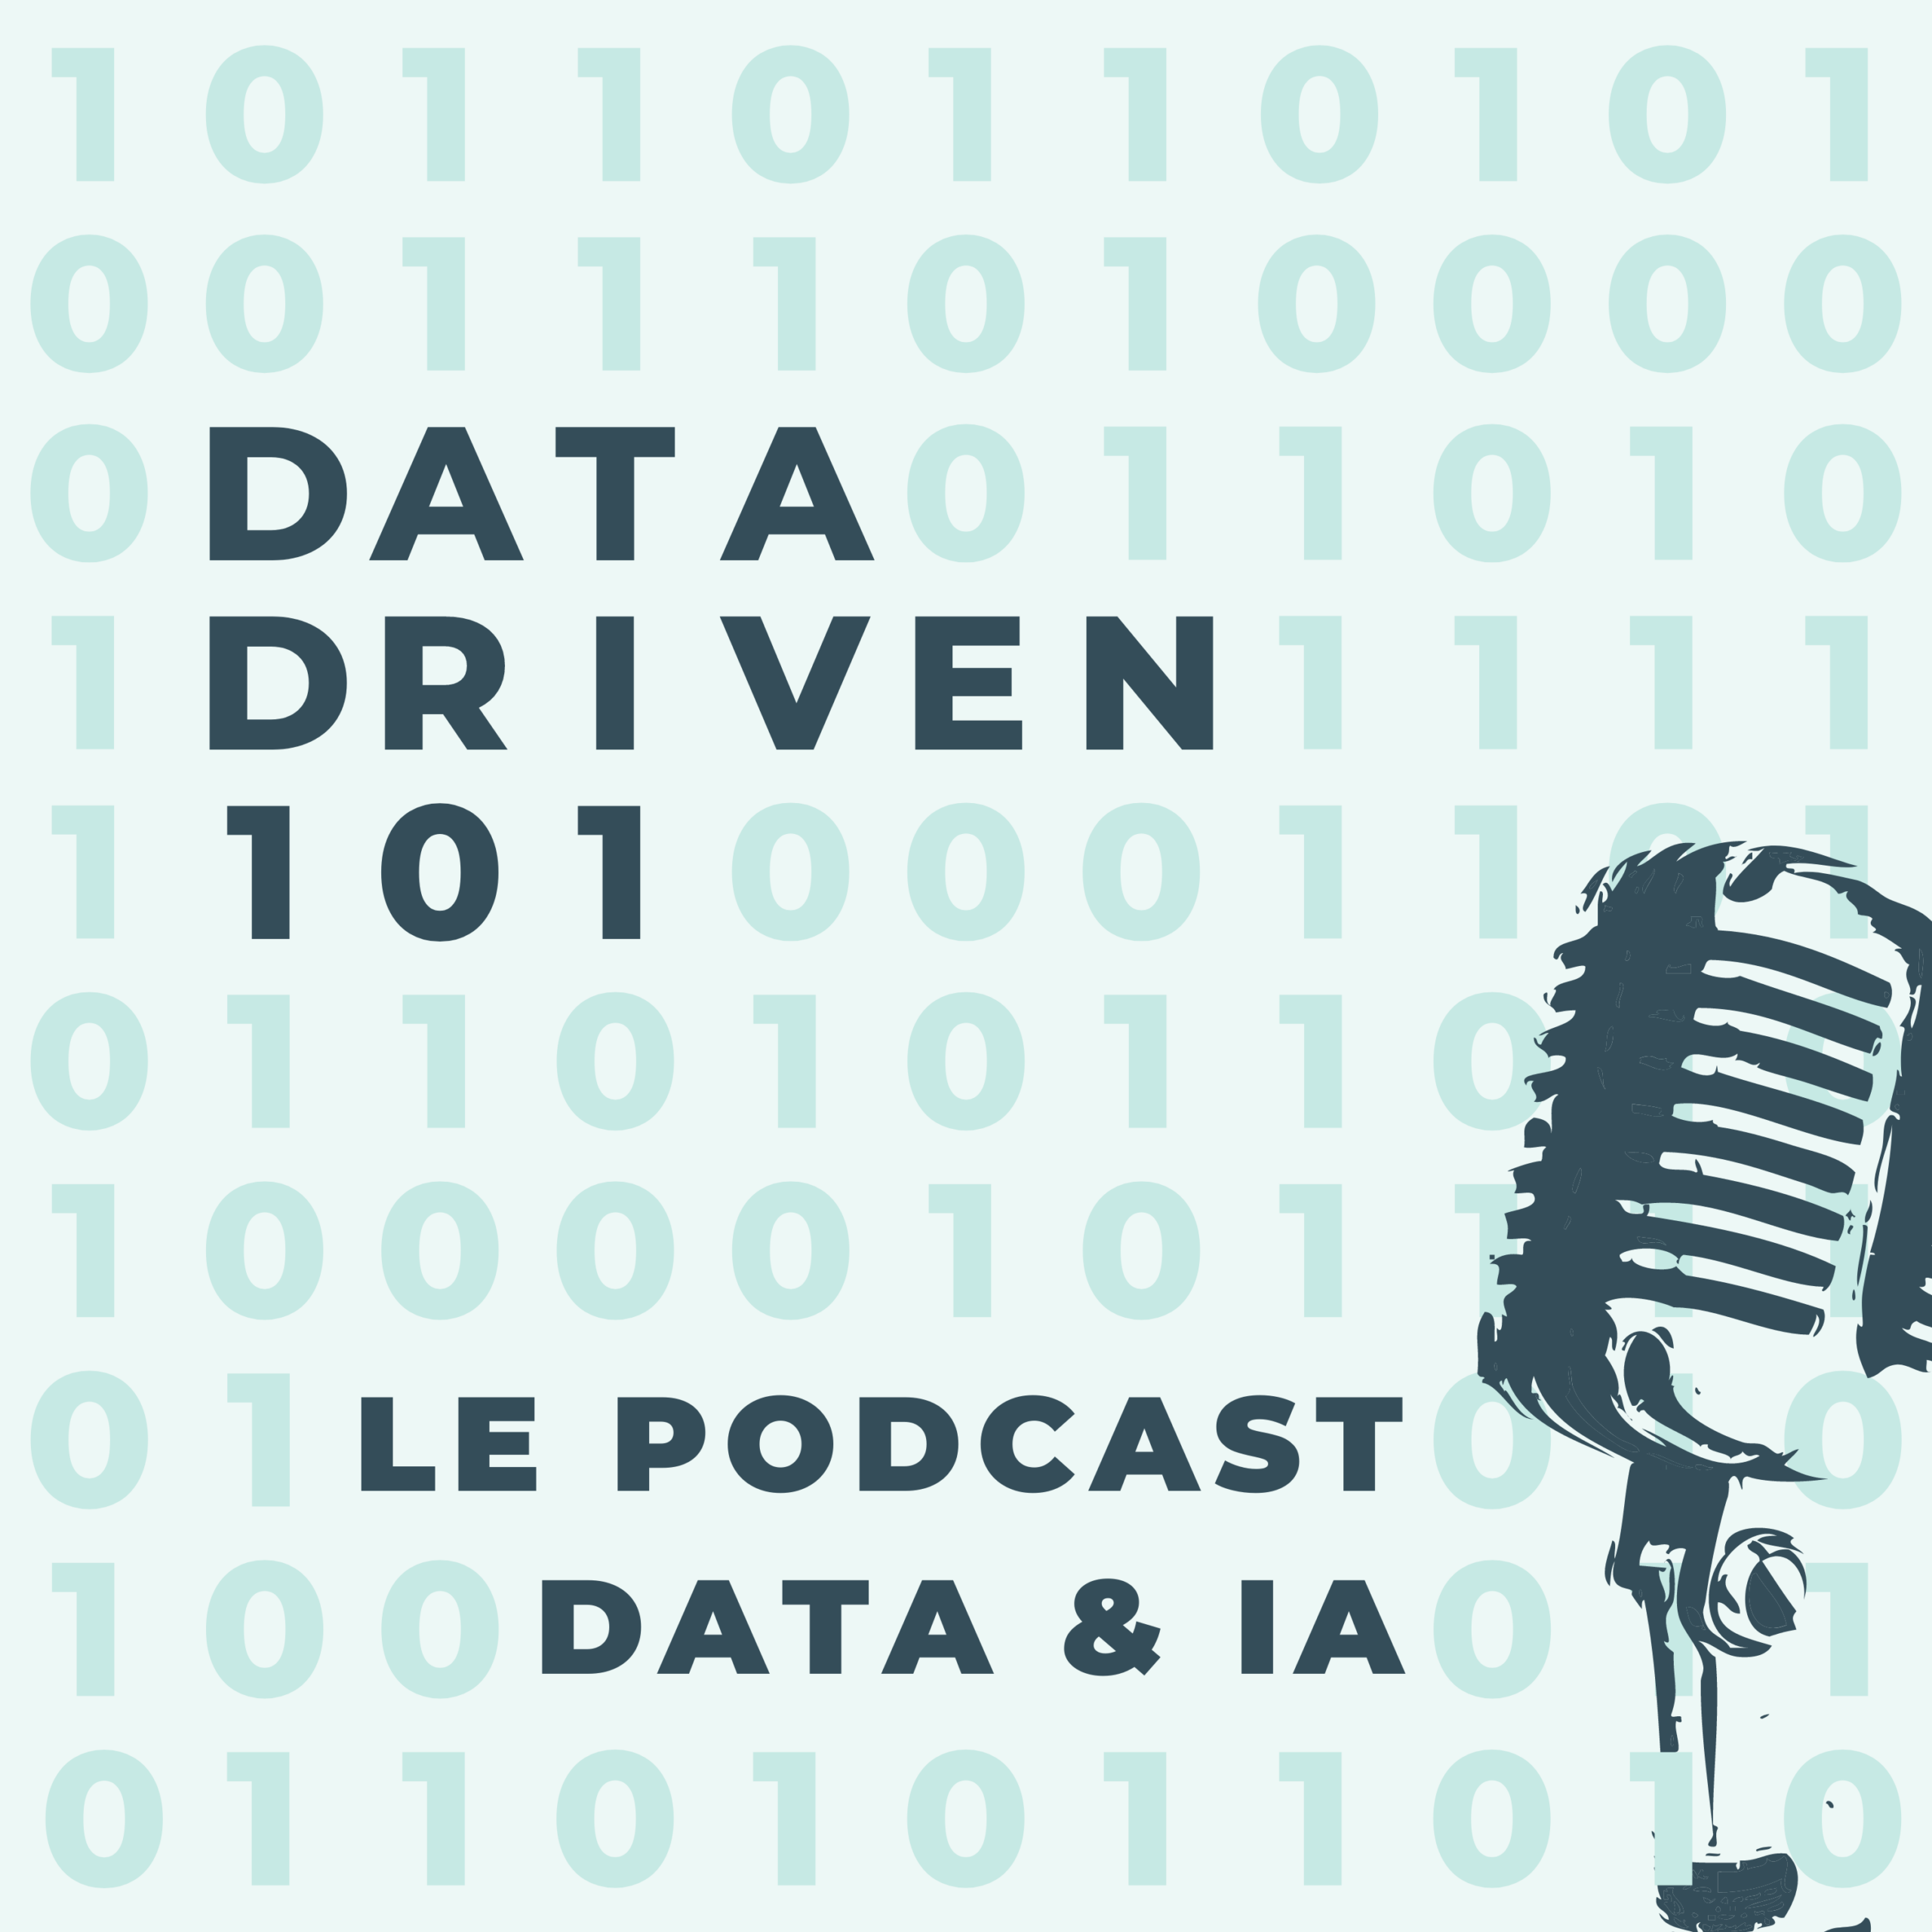 Data driven 101 podcast IA et Data